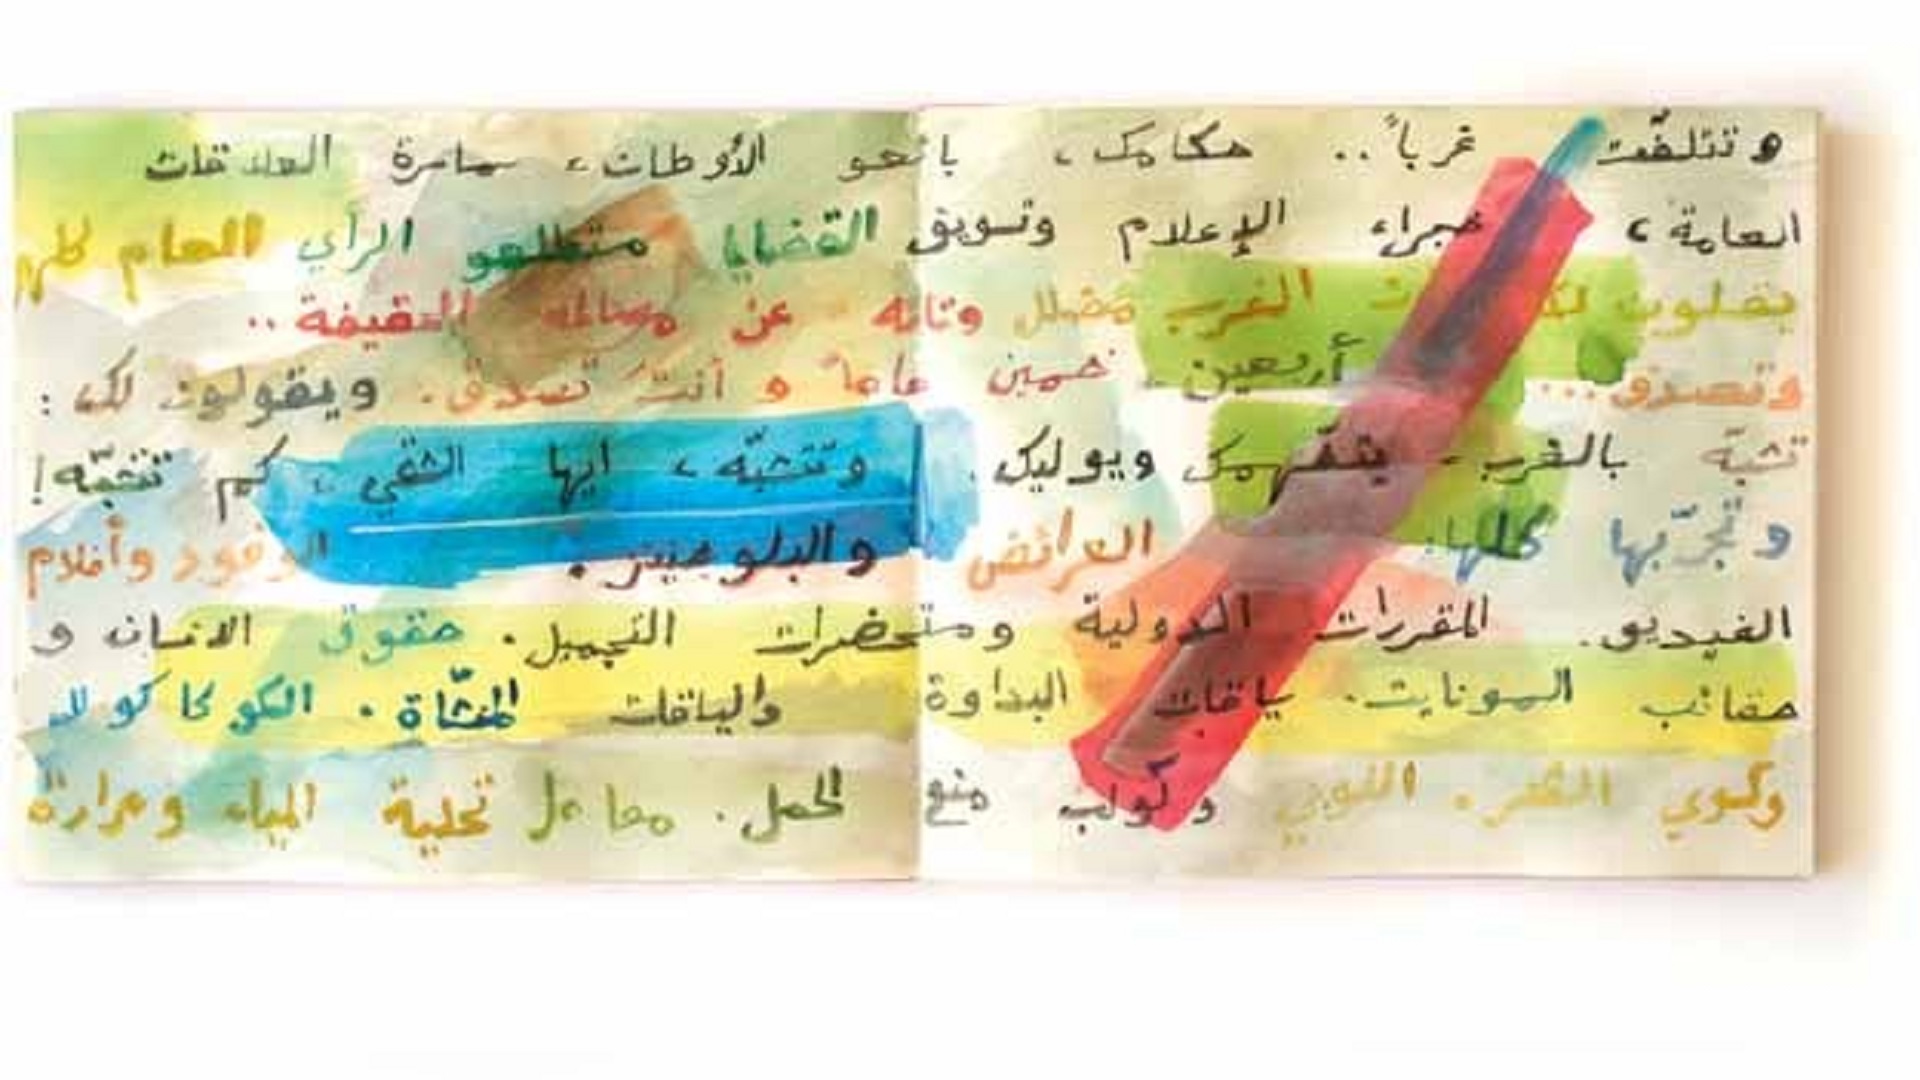 دفتر مقتطفات ملوّنة بريشة إيتيل عدنان